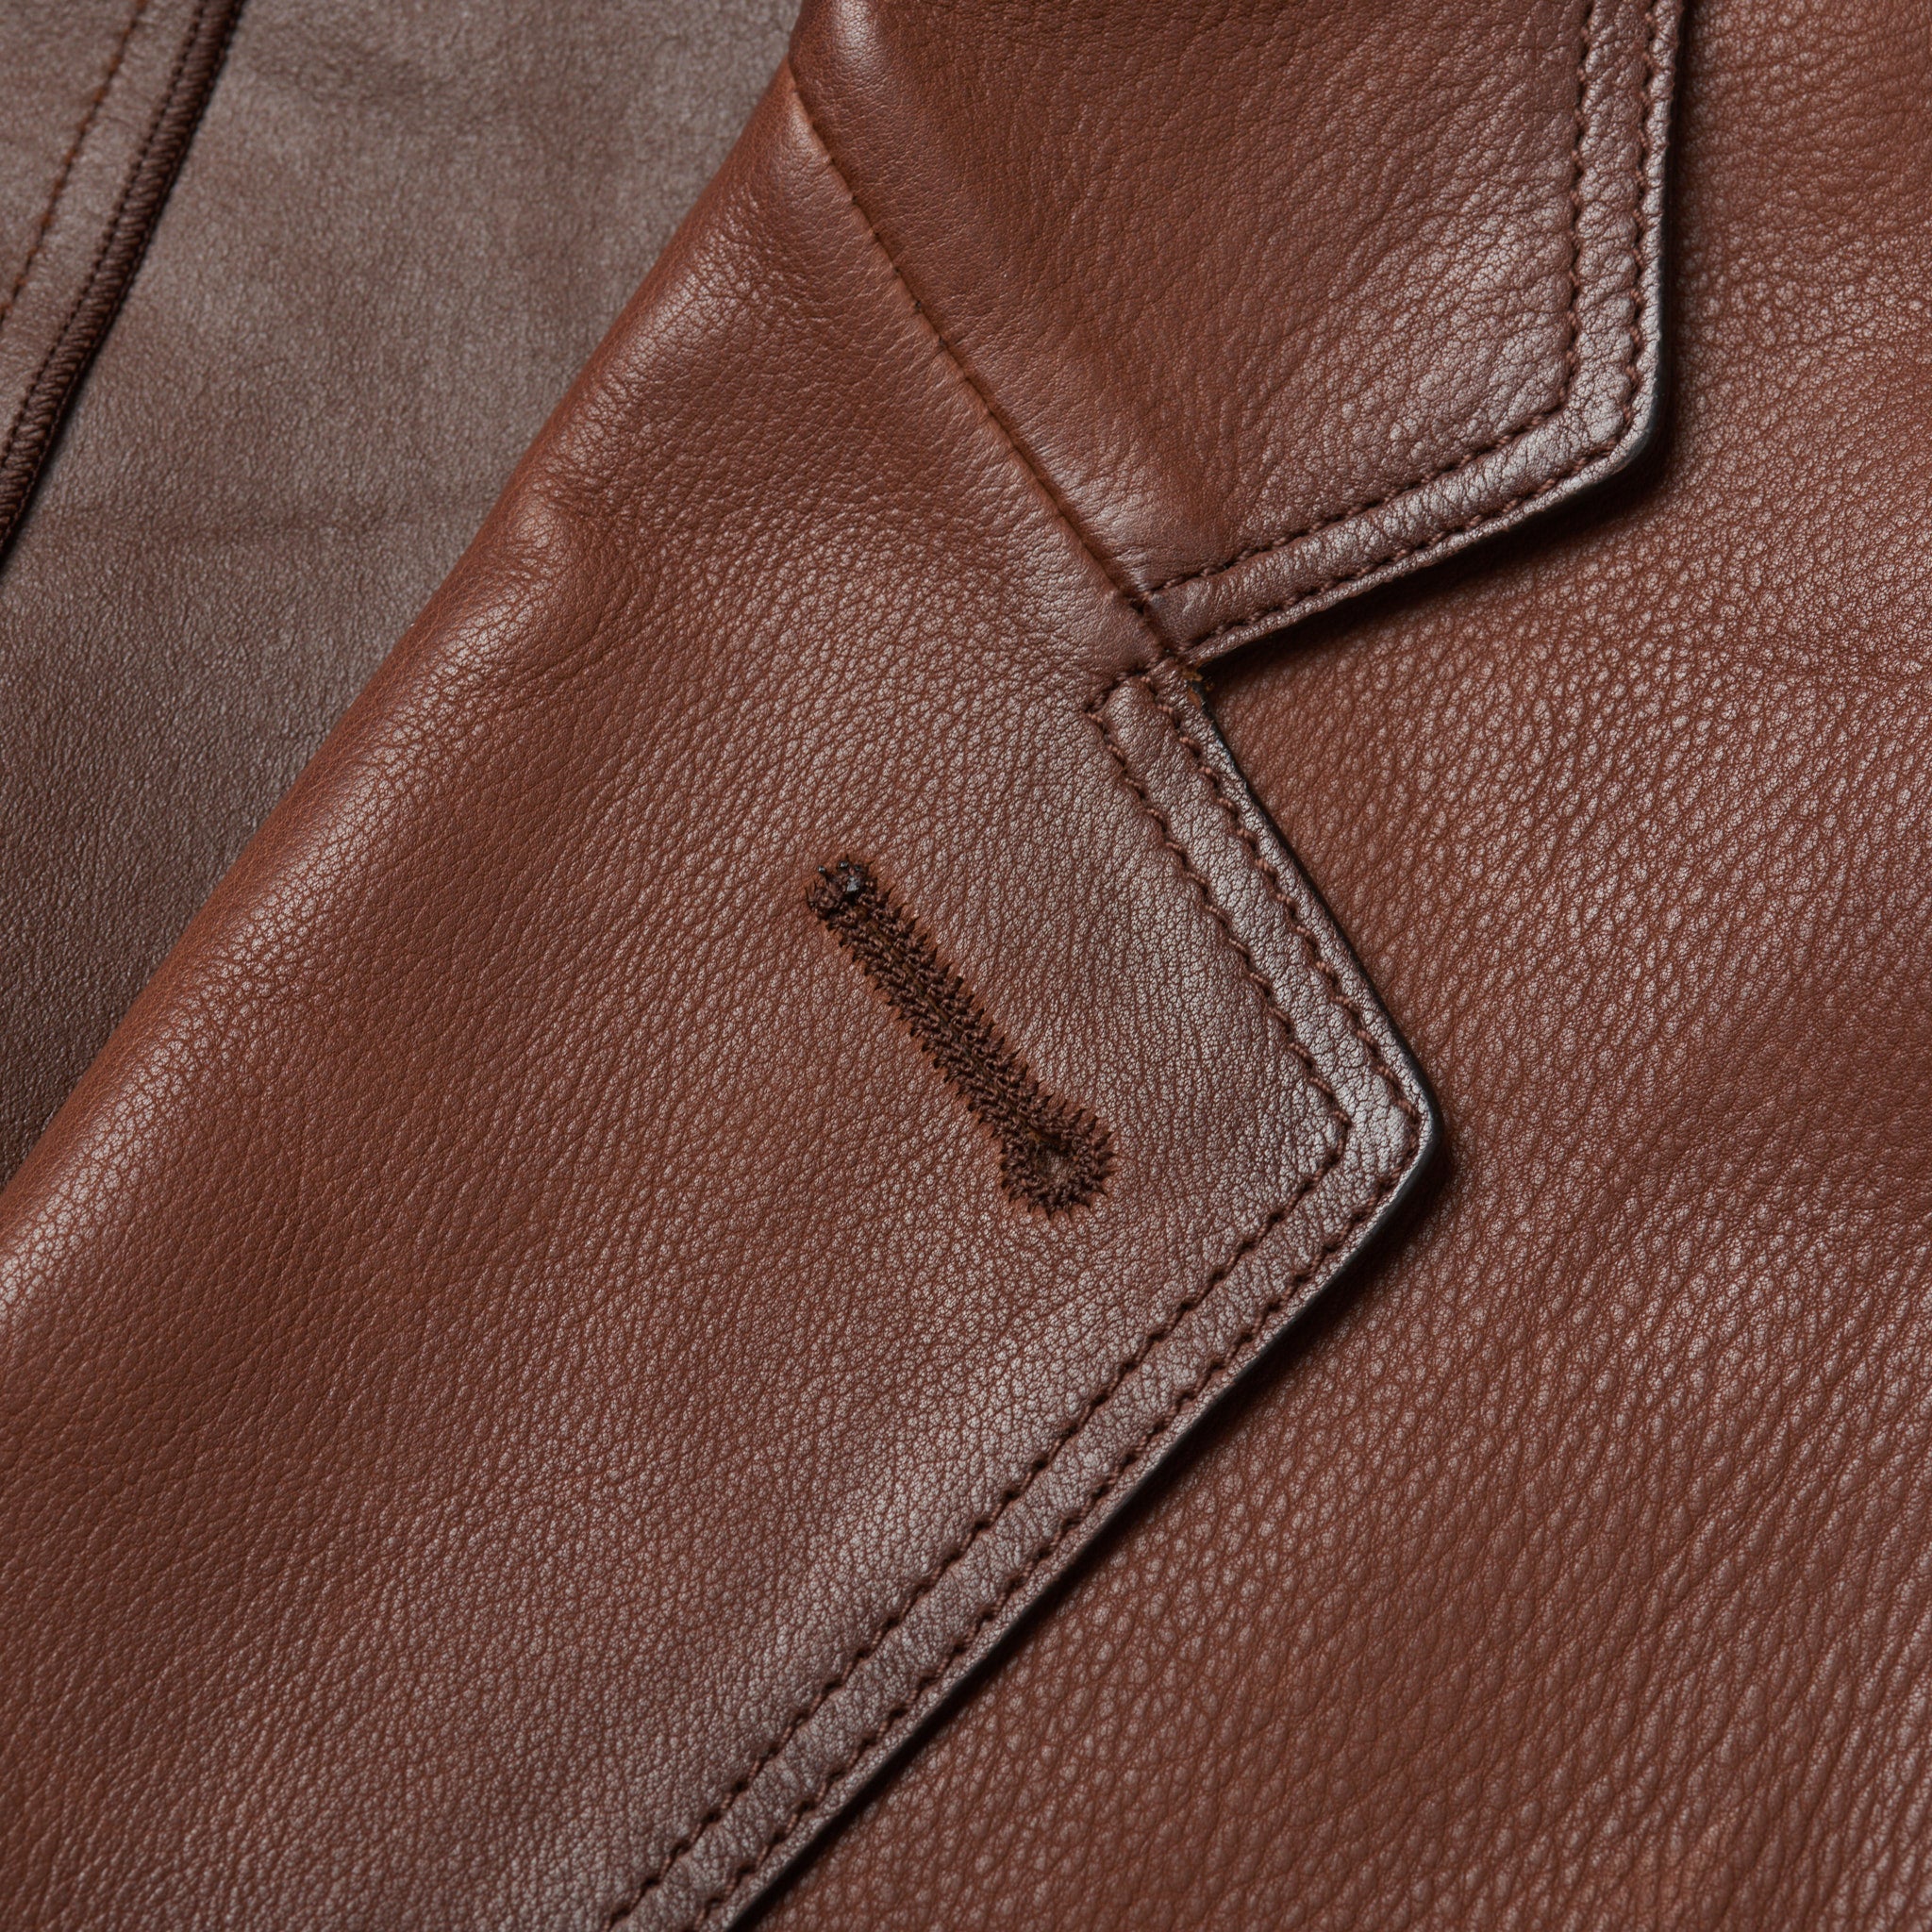 BERLUTI Paris Brown Patina Leather 2 Button Unlined Jacket Blazer EU 5